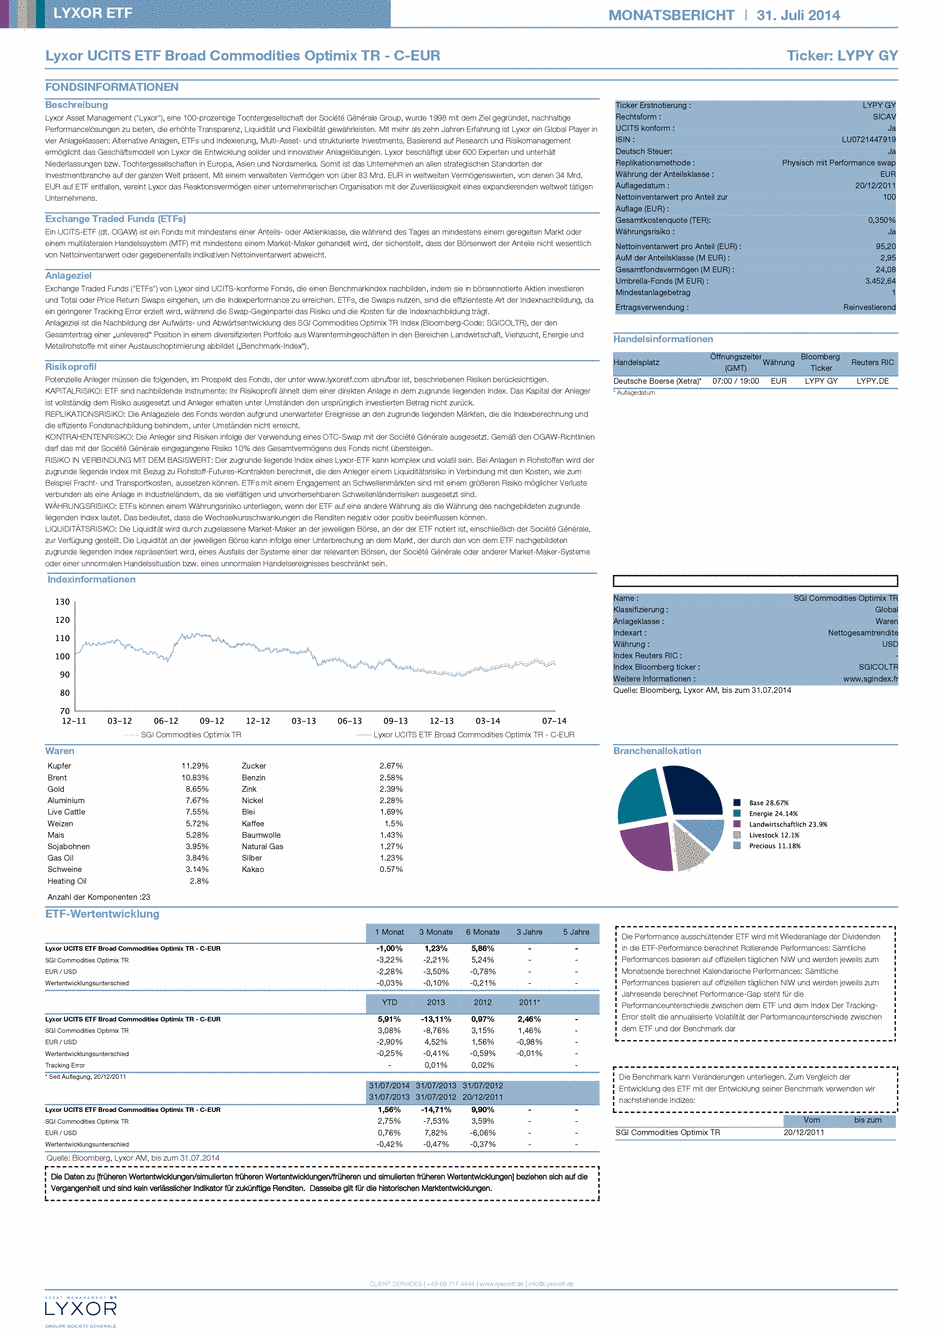 Reporting Lyxor UCITS ETF Broad Commodities Optimix TR - C-EUR - 31/07/2014 - German